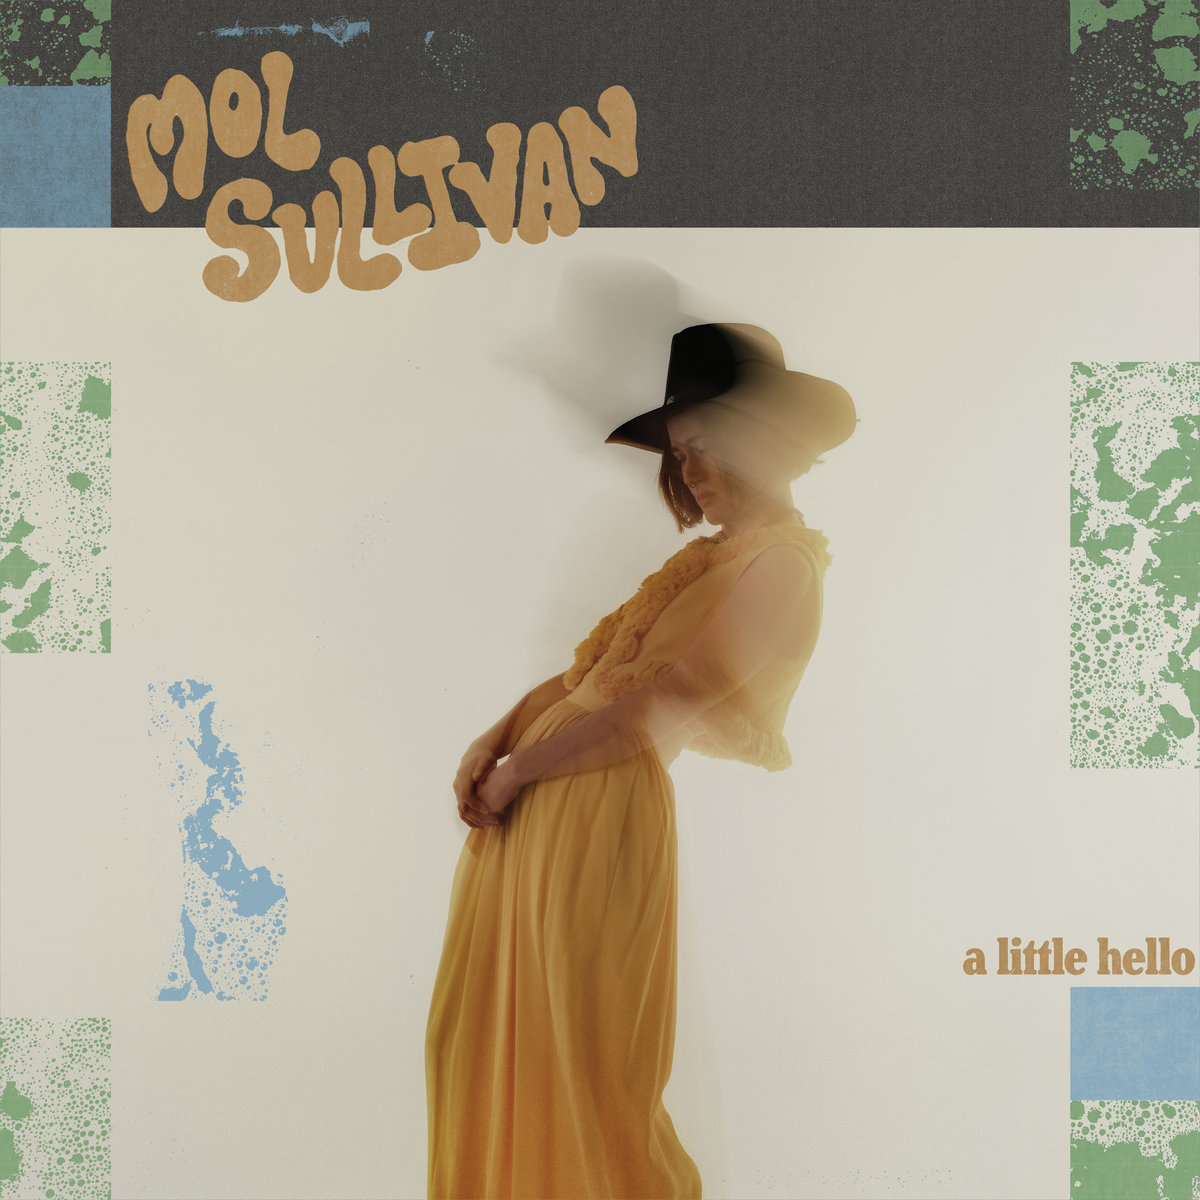 mol sullivan a little hello album art - photo of sullivan wearing a yellow dress and a cowboy hat